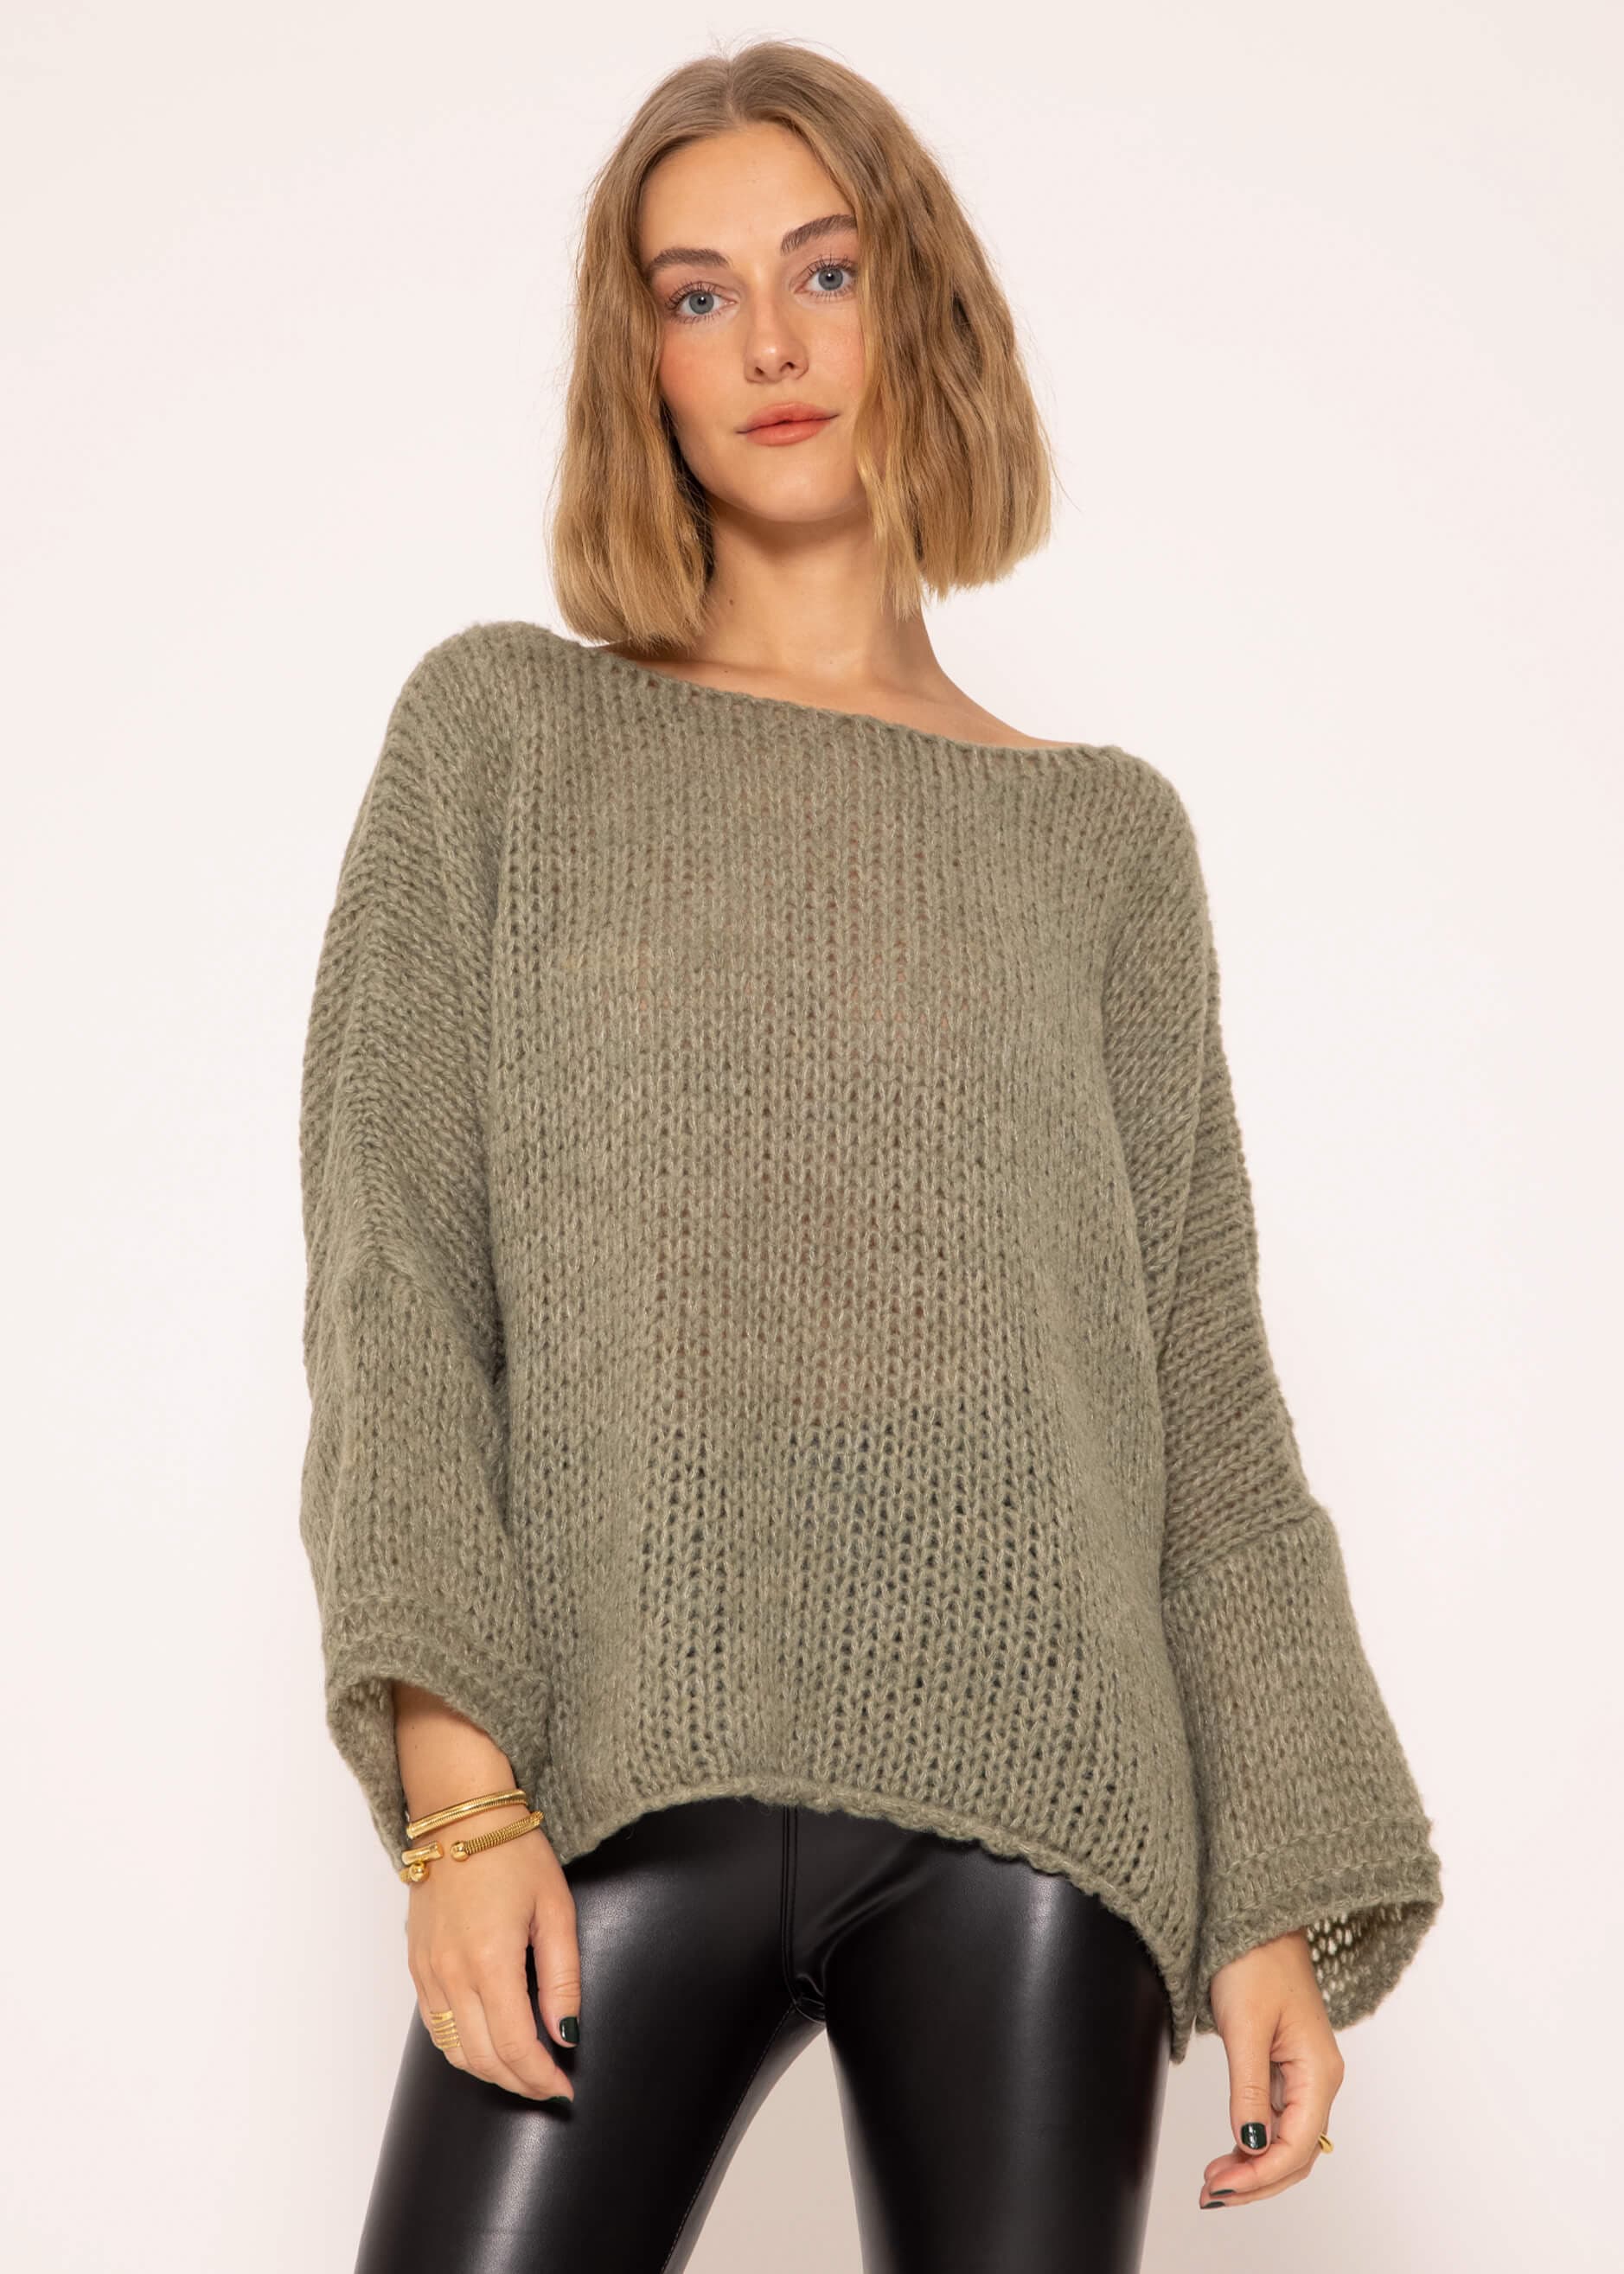 Oversize Pullover, khaki | Bekleidung SASSYCLASSY | | Pullover